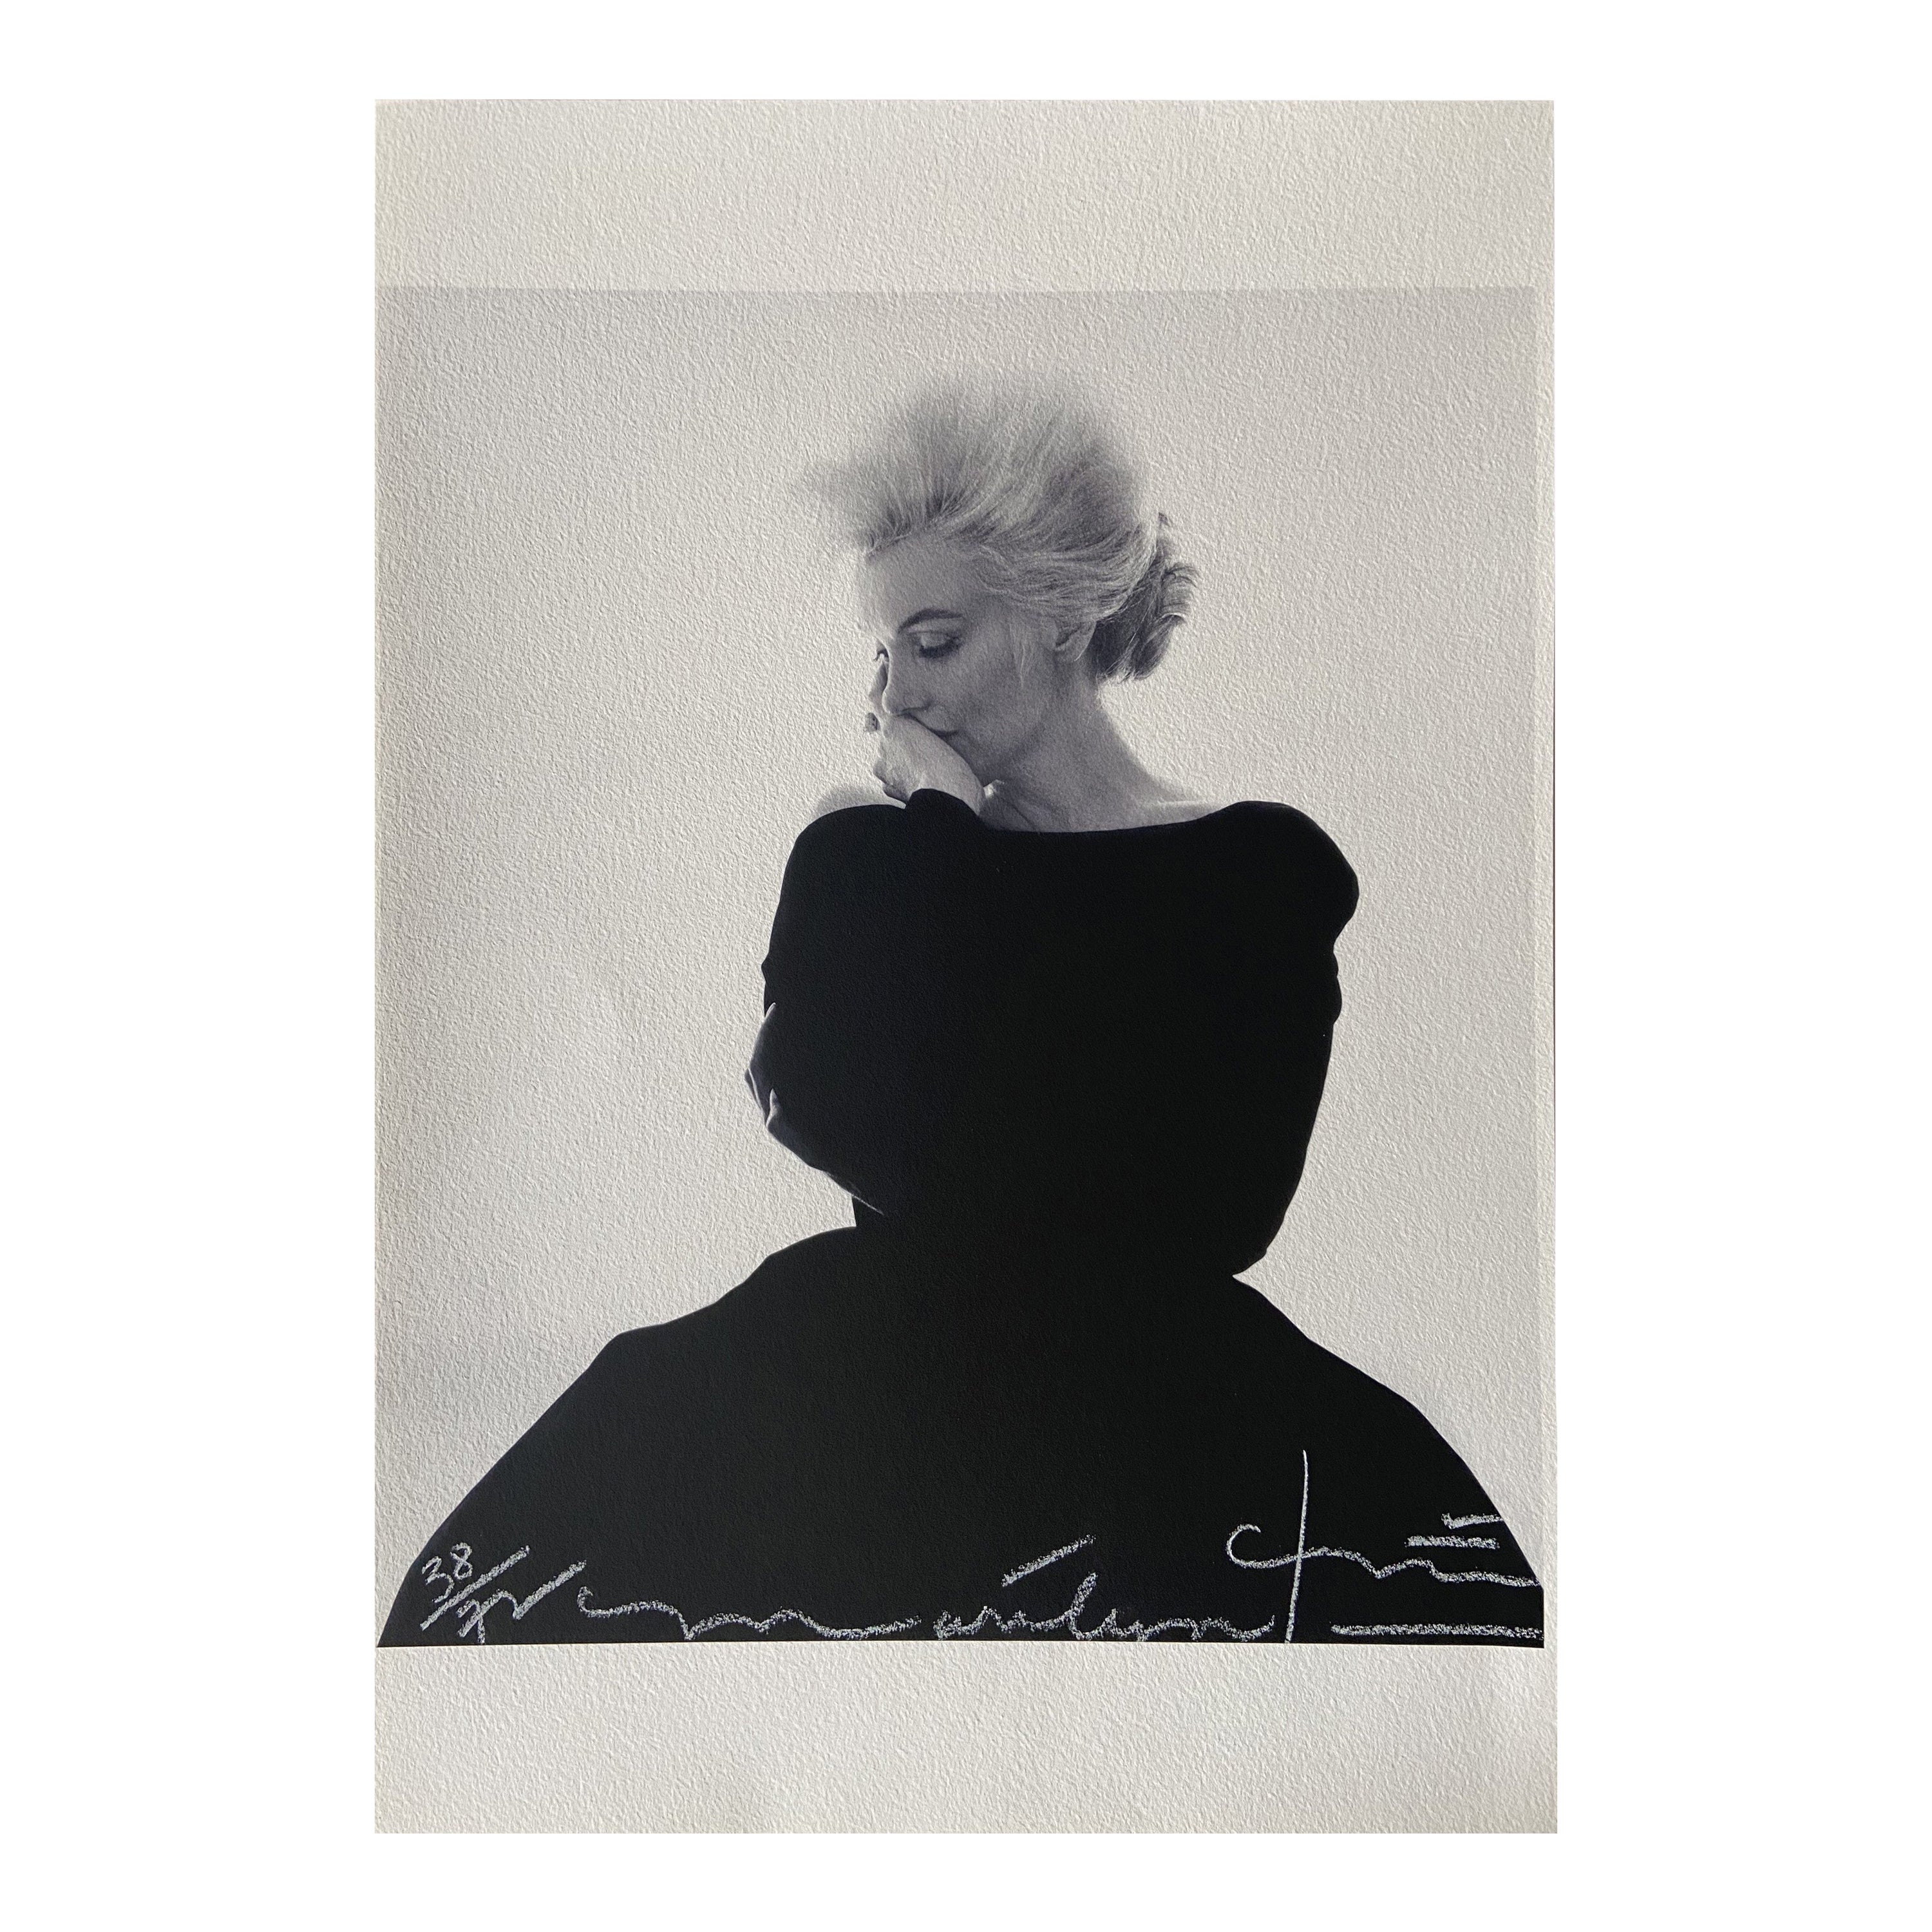 Bert Stern, Marilyn in Vogue, 2011